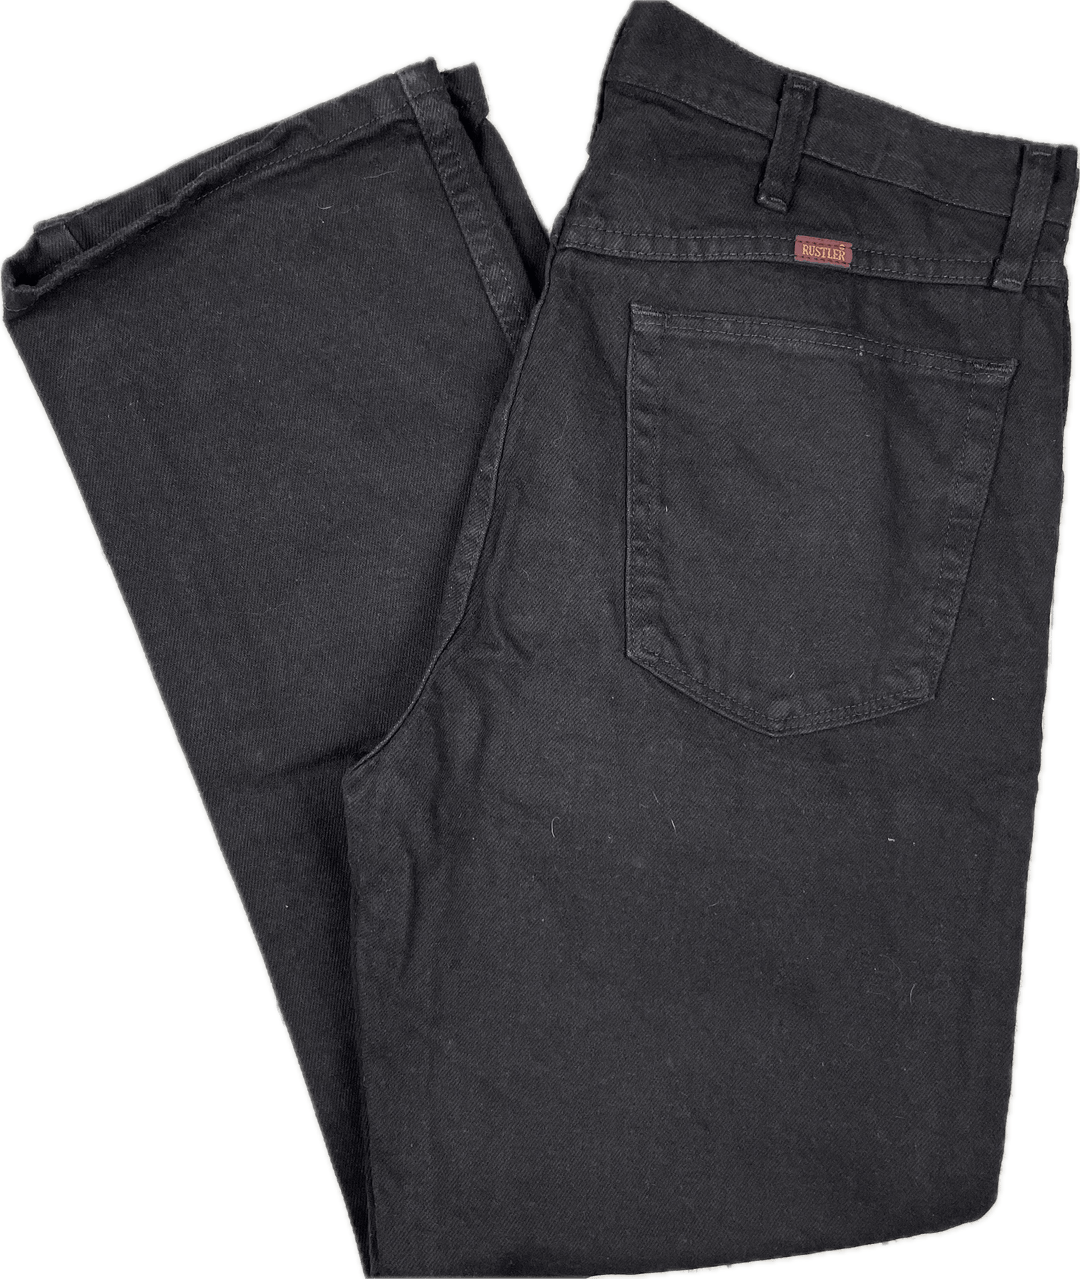 Rustler Black Denim Boot Cut Jeans -Size 34 - Jean Pool